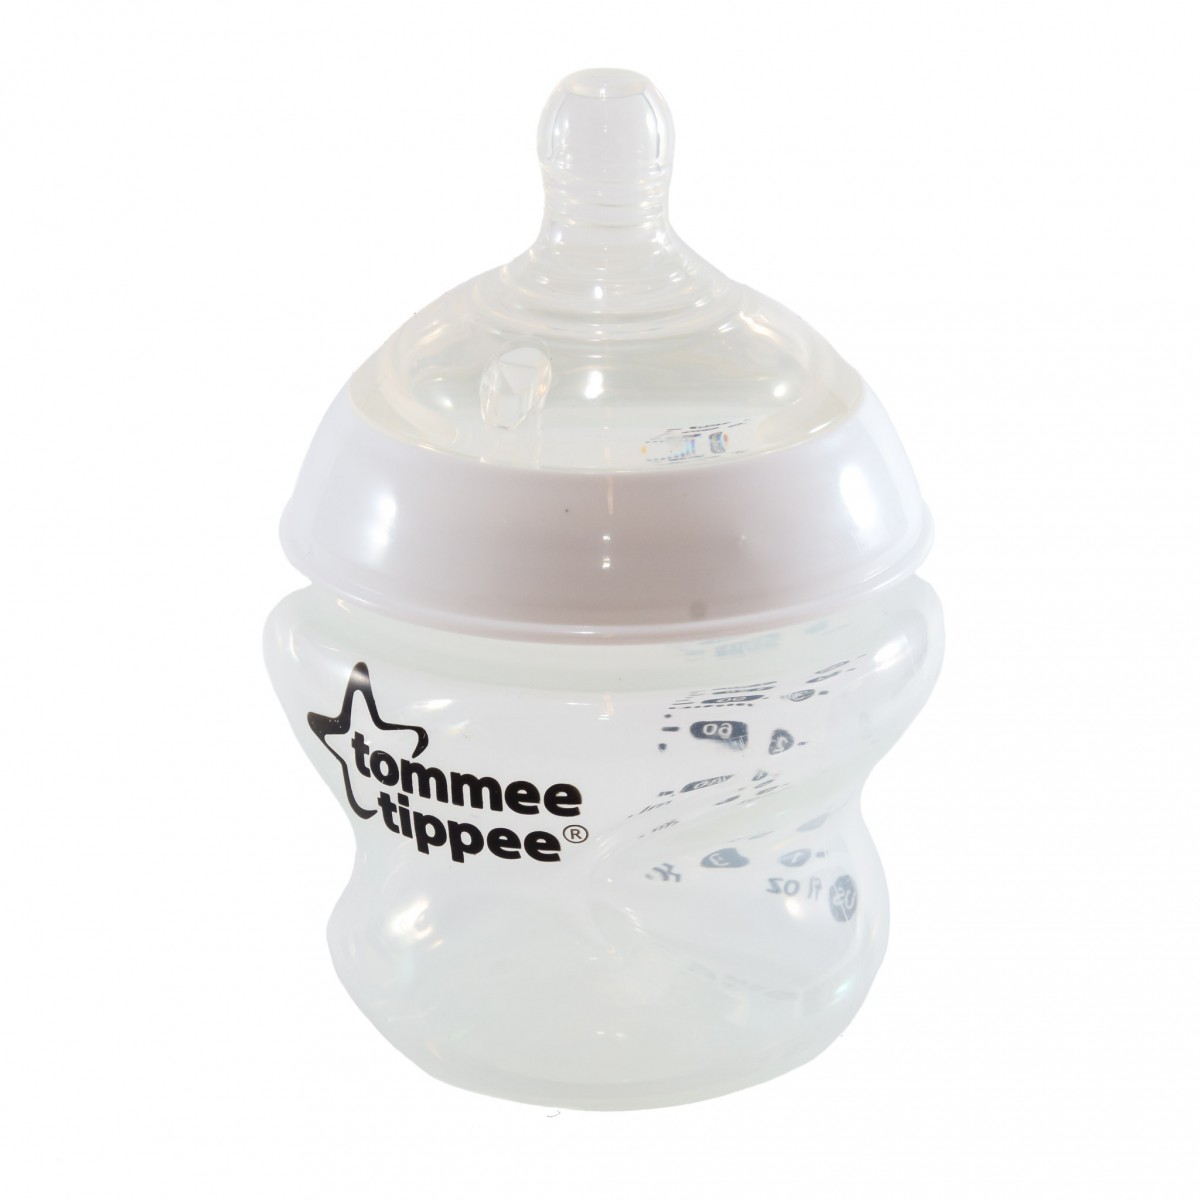 Tommee Tippee Closer to Nature Newborn Feeding Gift Set | Breast-like  Nipples, Anti-Colic, BPA-free